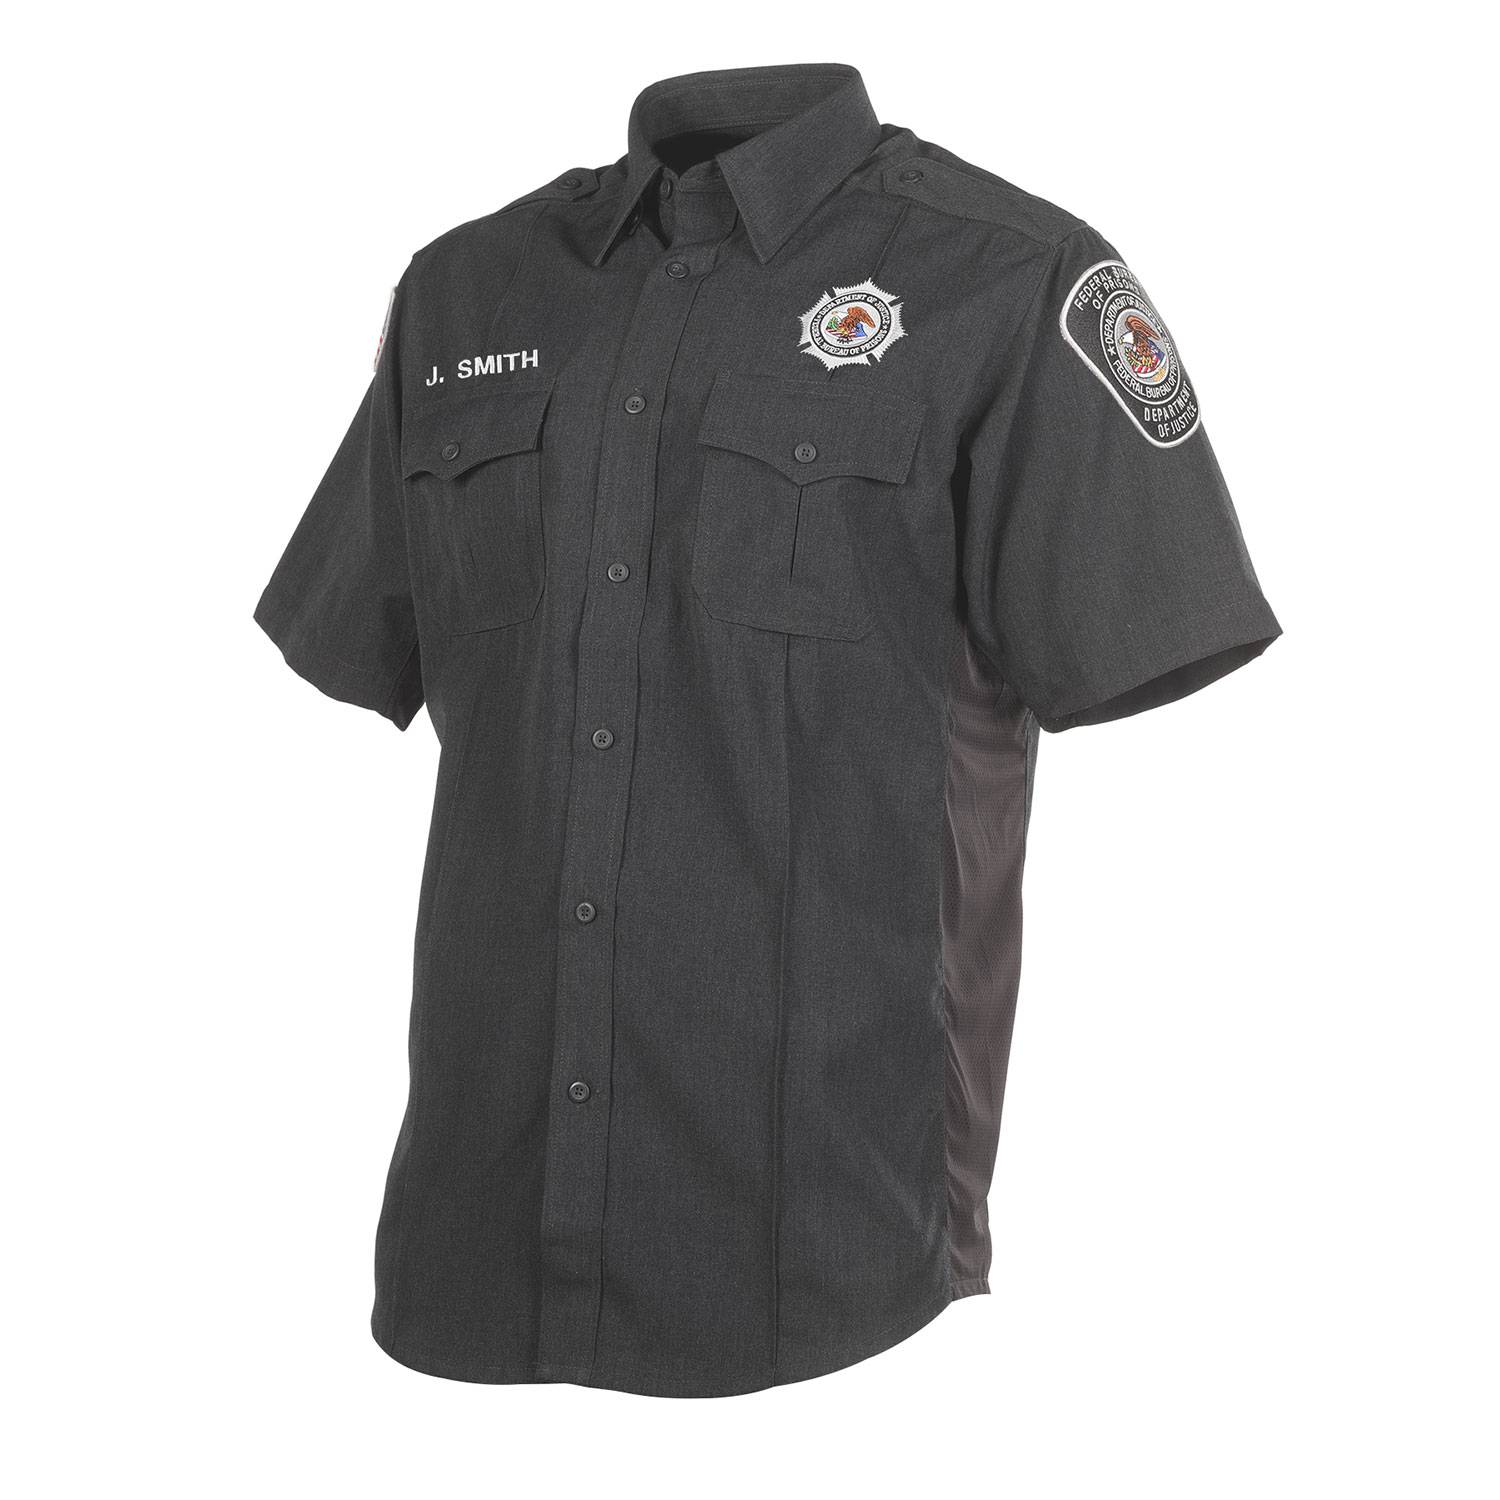 Galls FBOP Men's Uniform Dress Shirt - Class B (Charcoal)